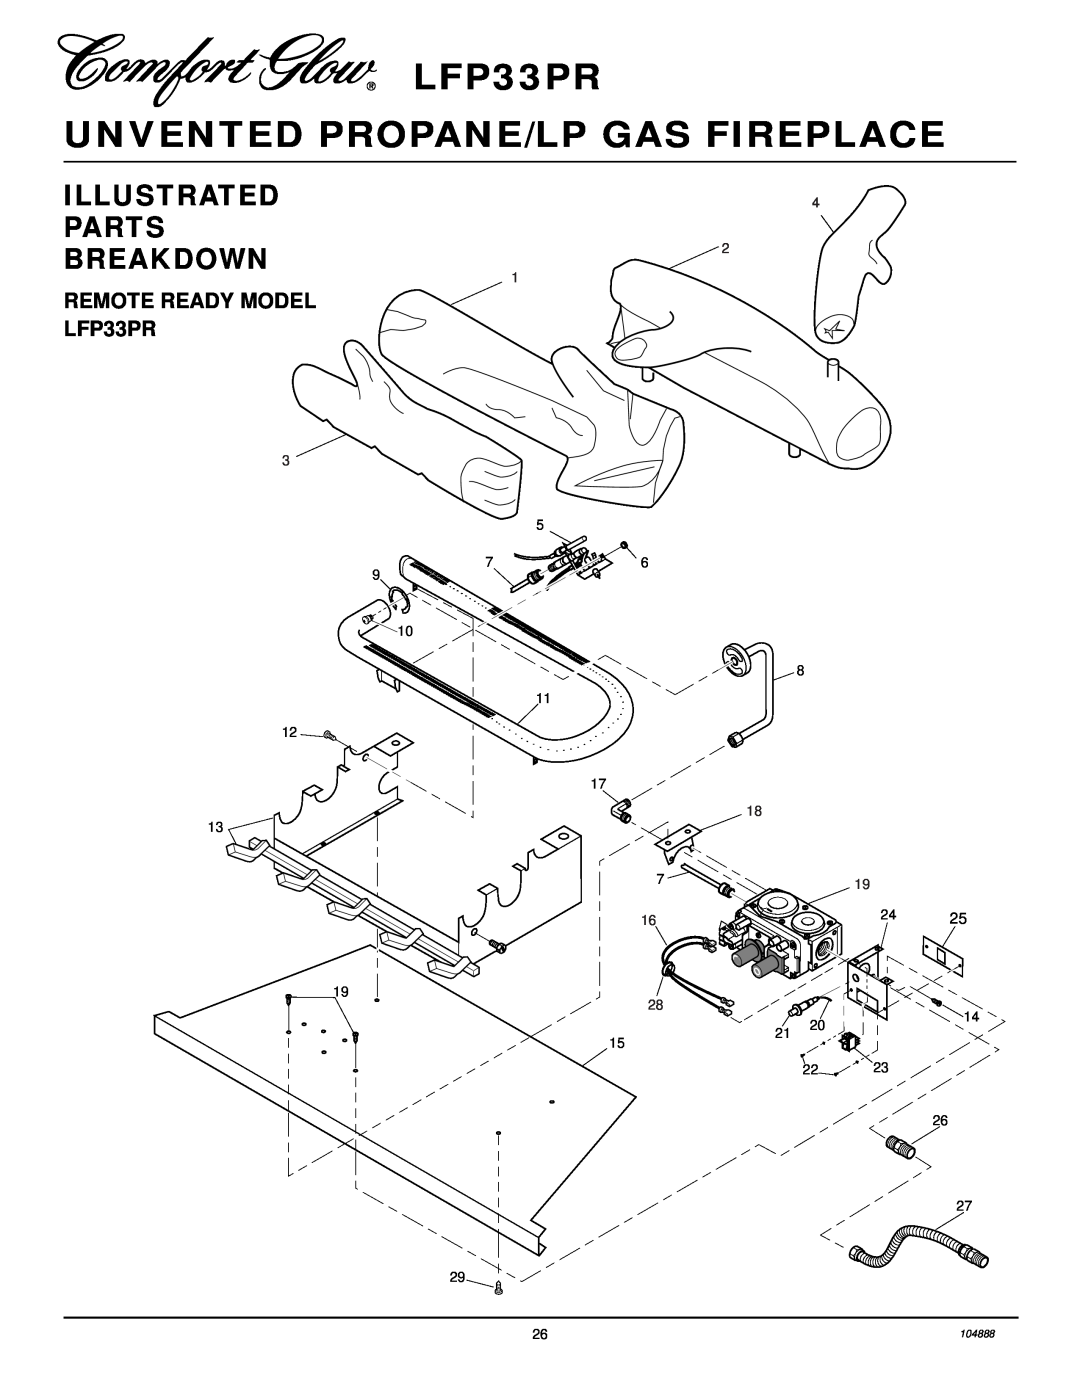 Desa Illustrated Parts Breakdown, REMOTE READY MODEL LFP33PR, LFP33PR UNVENTED PROPANE/LP GAS FIREPLACE 